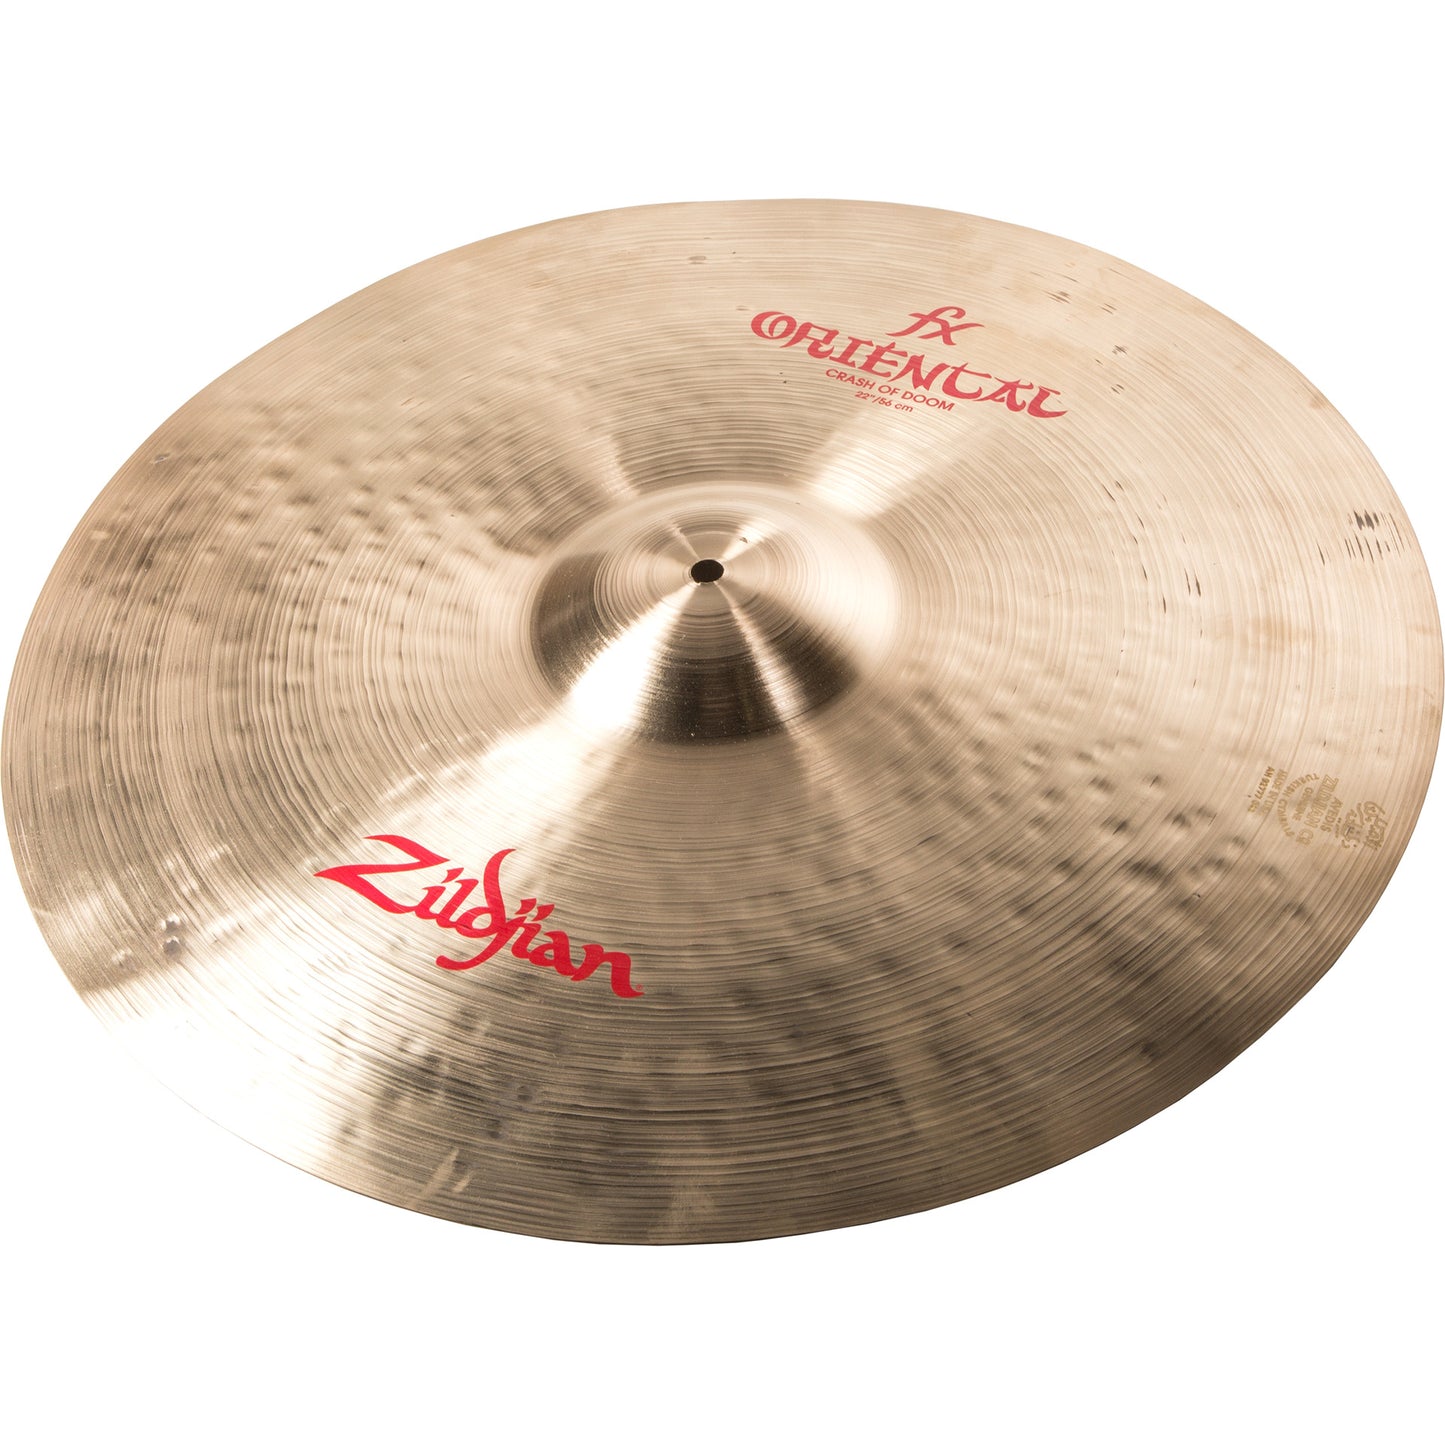 Zildjian 20” FX Series Oriental Crash of Doom Cymbal